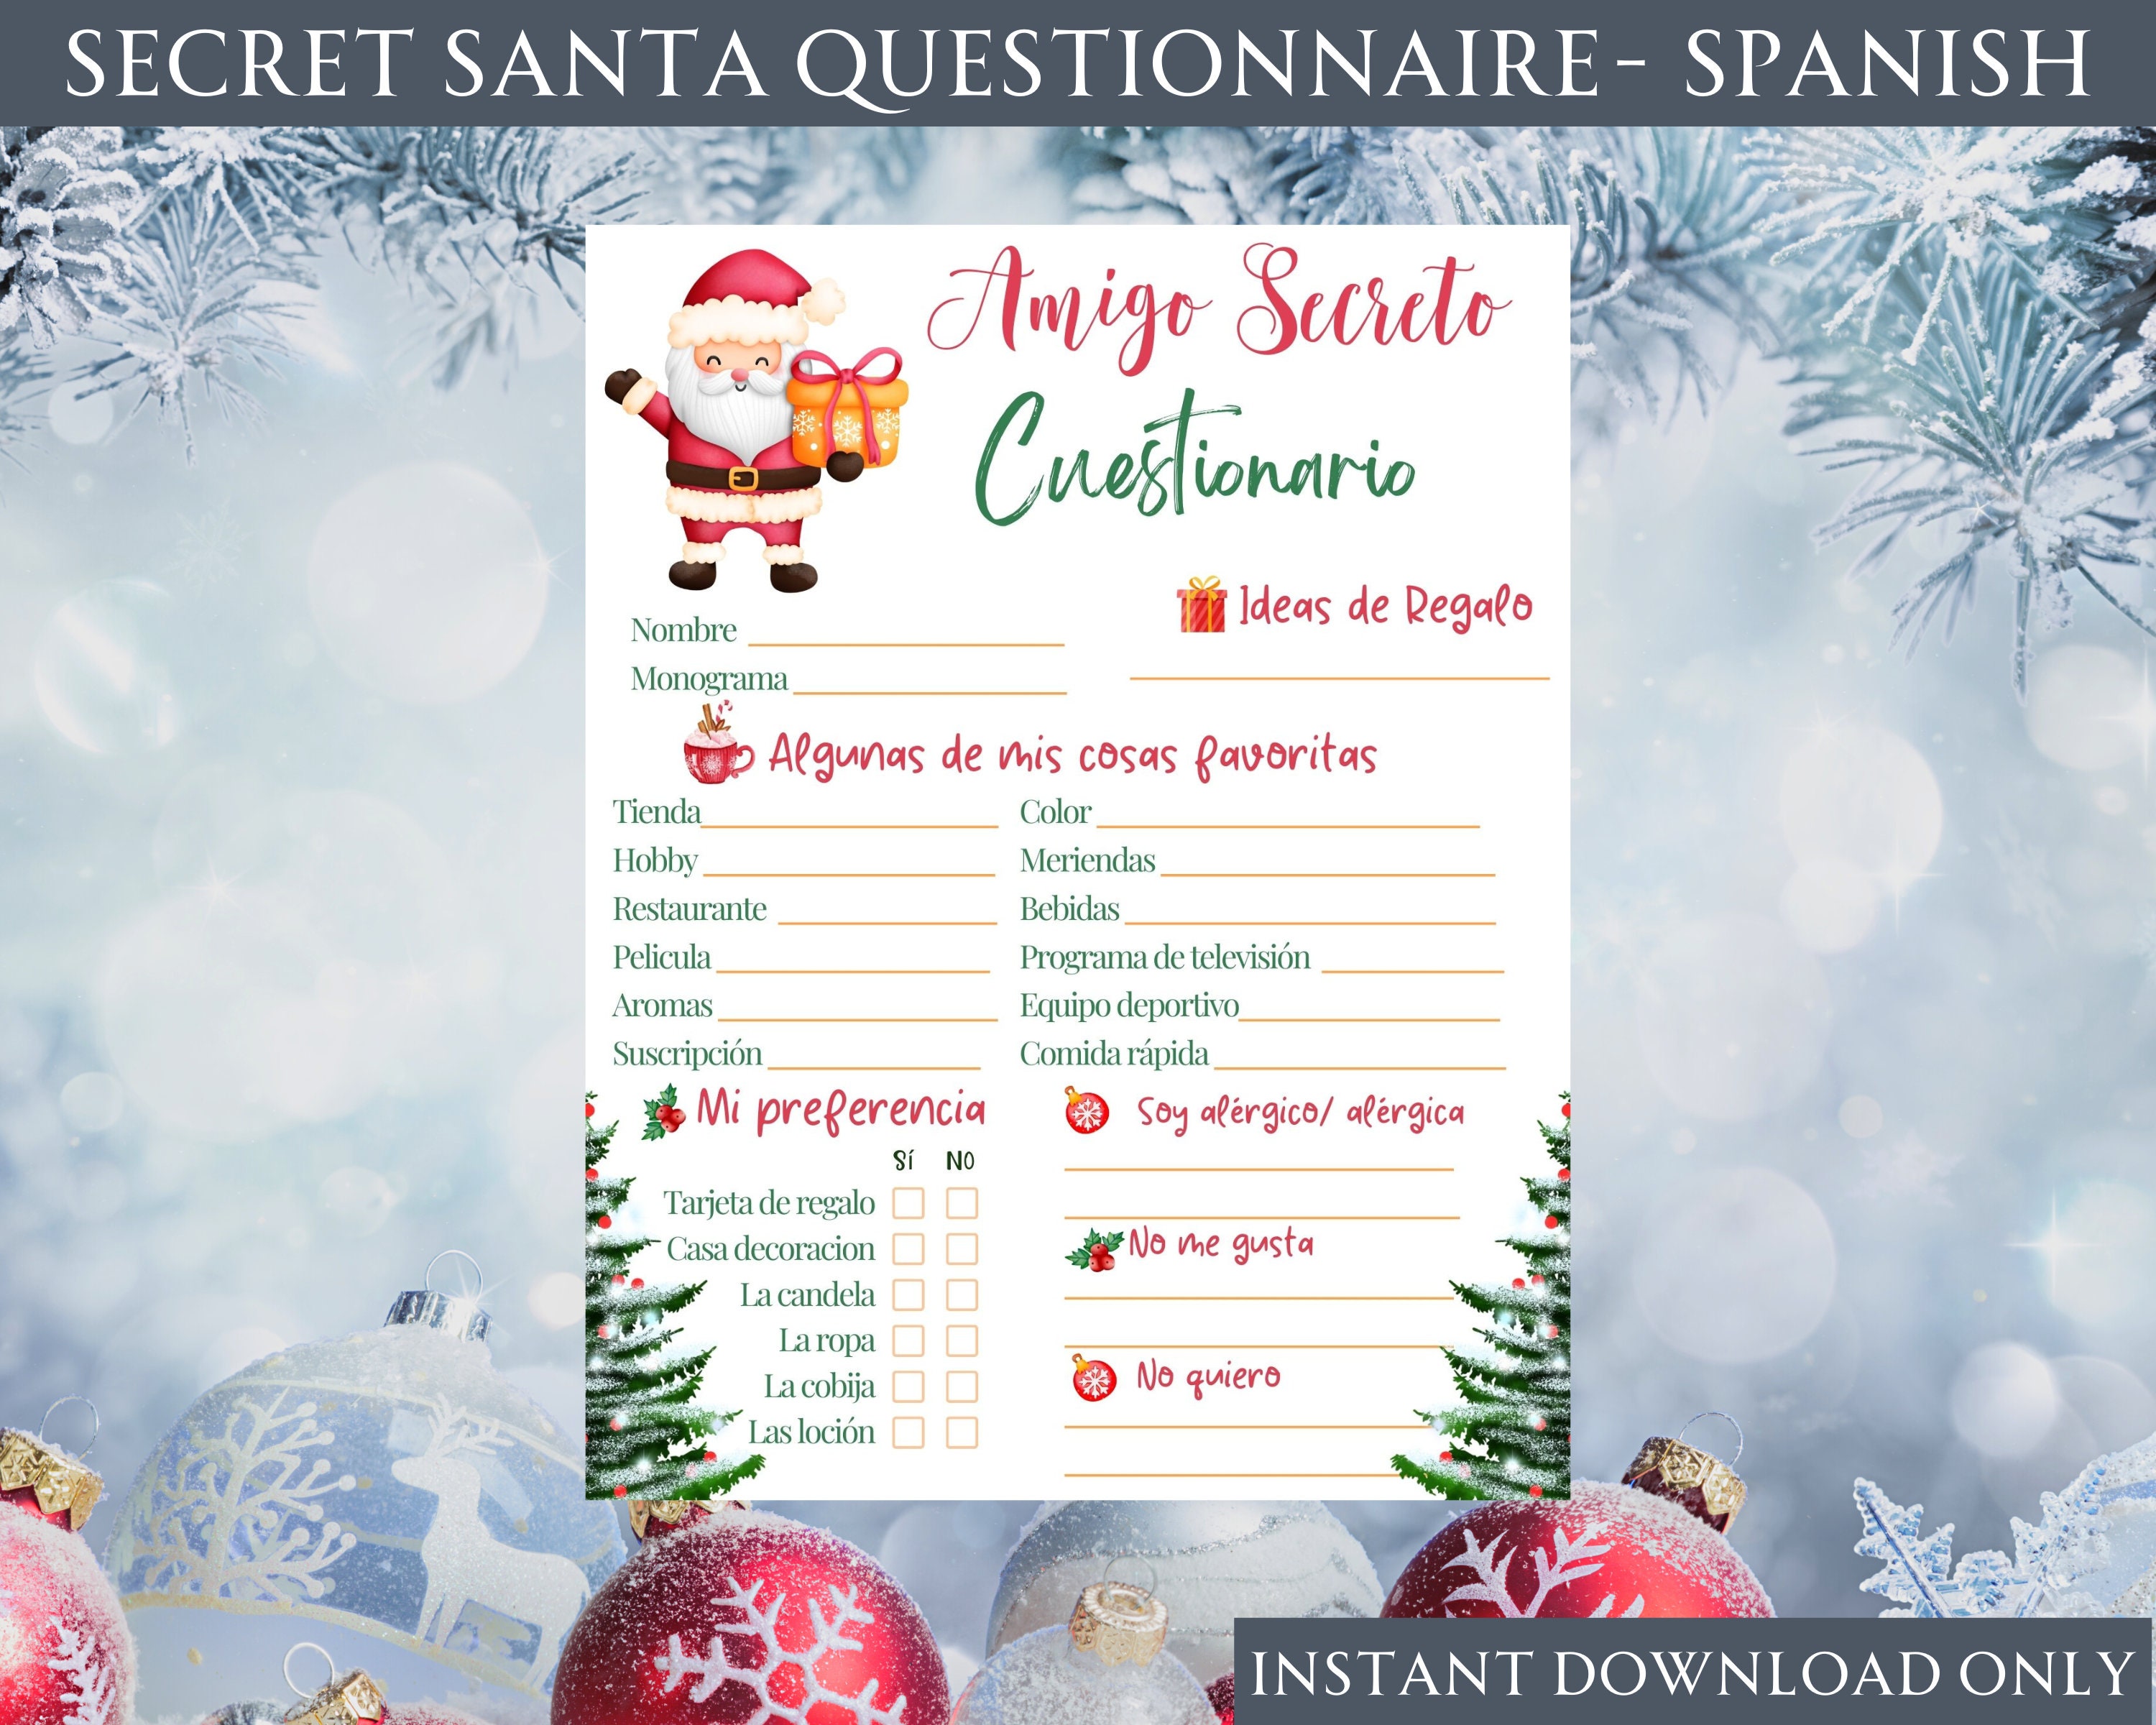 Secret Santa questionnaire (Amigo Secreto) Printable -PDF Instant Download  (Spanish version)